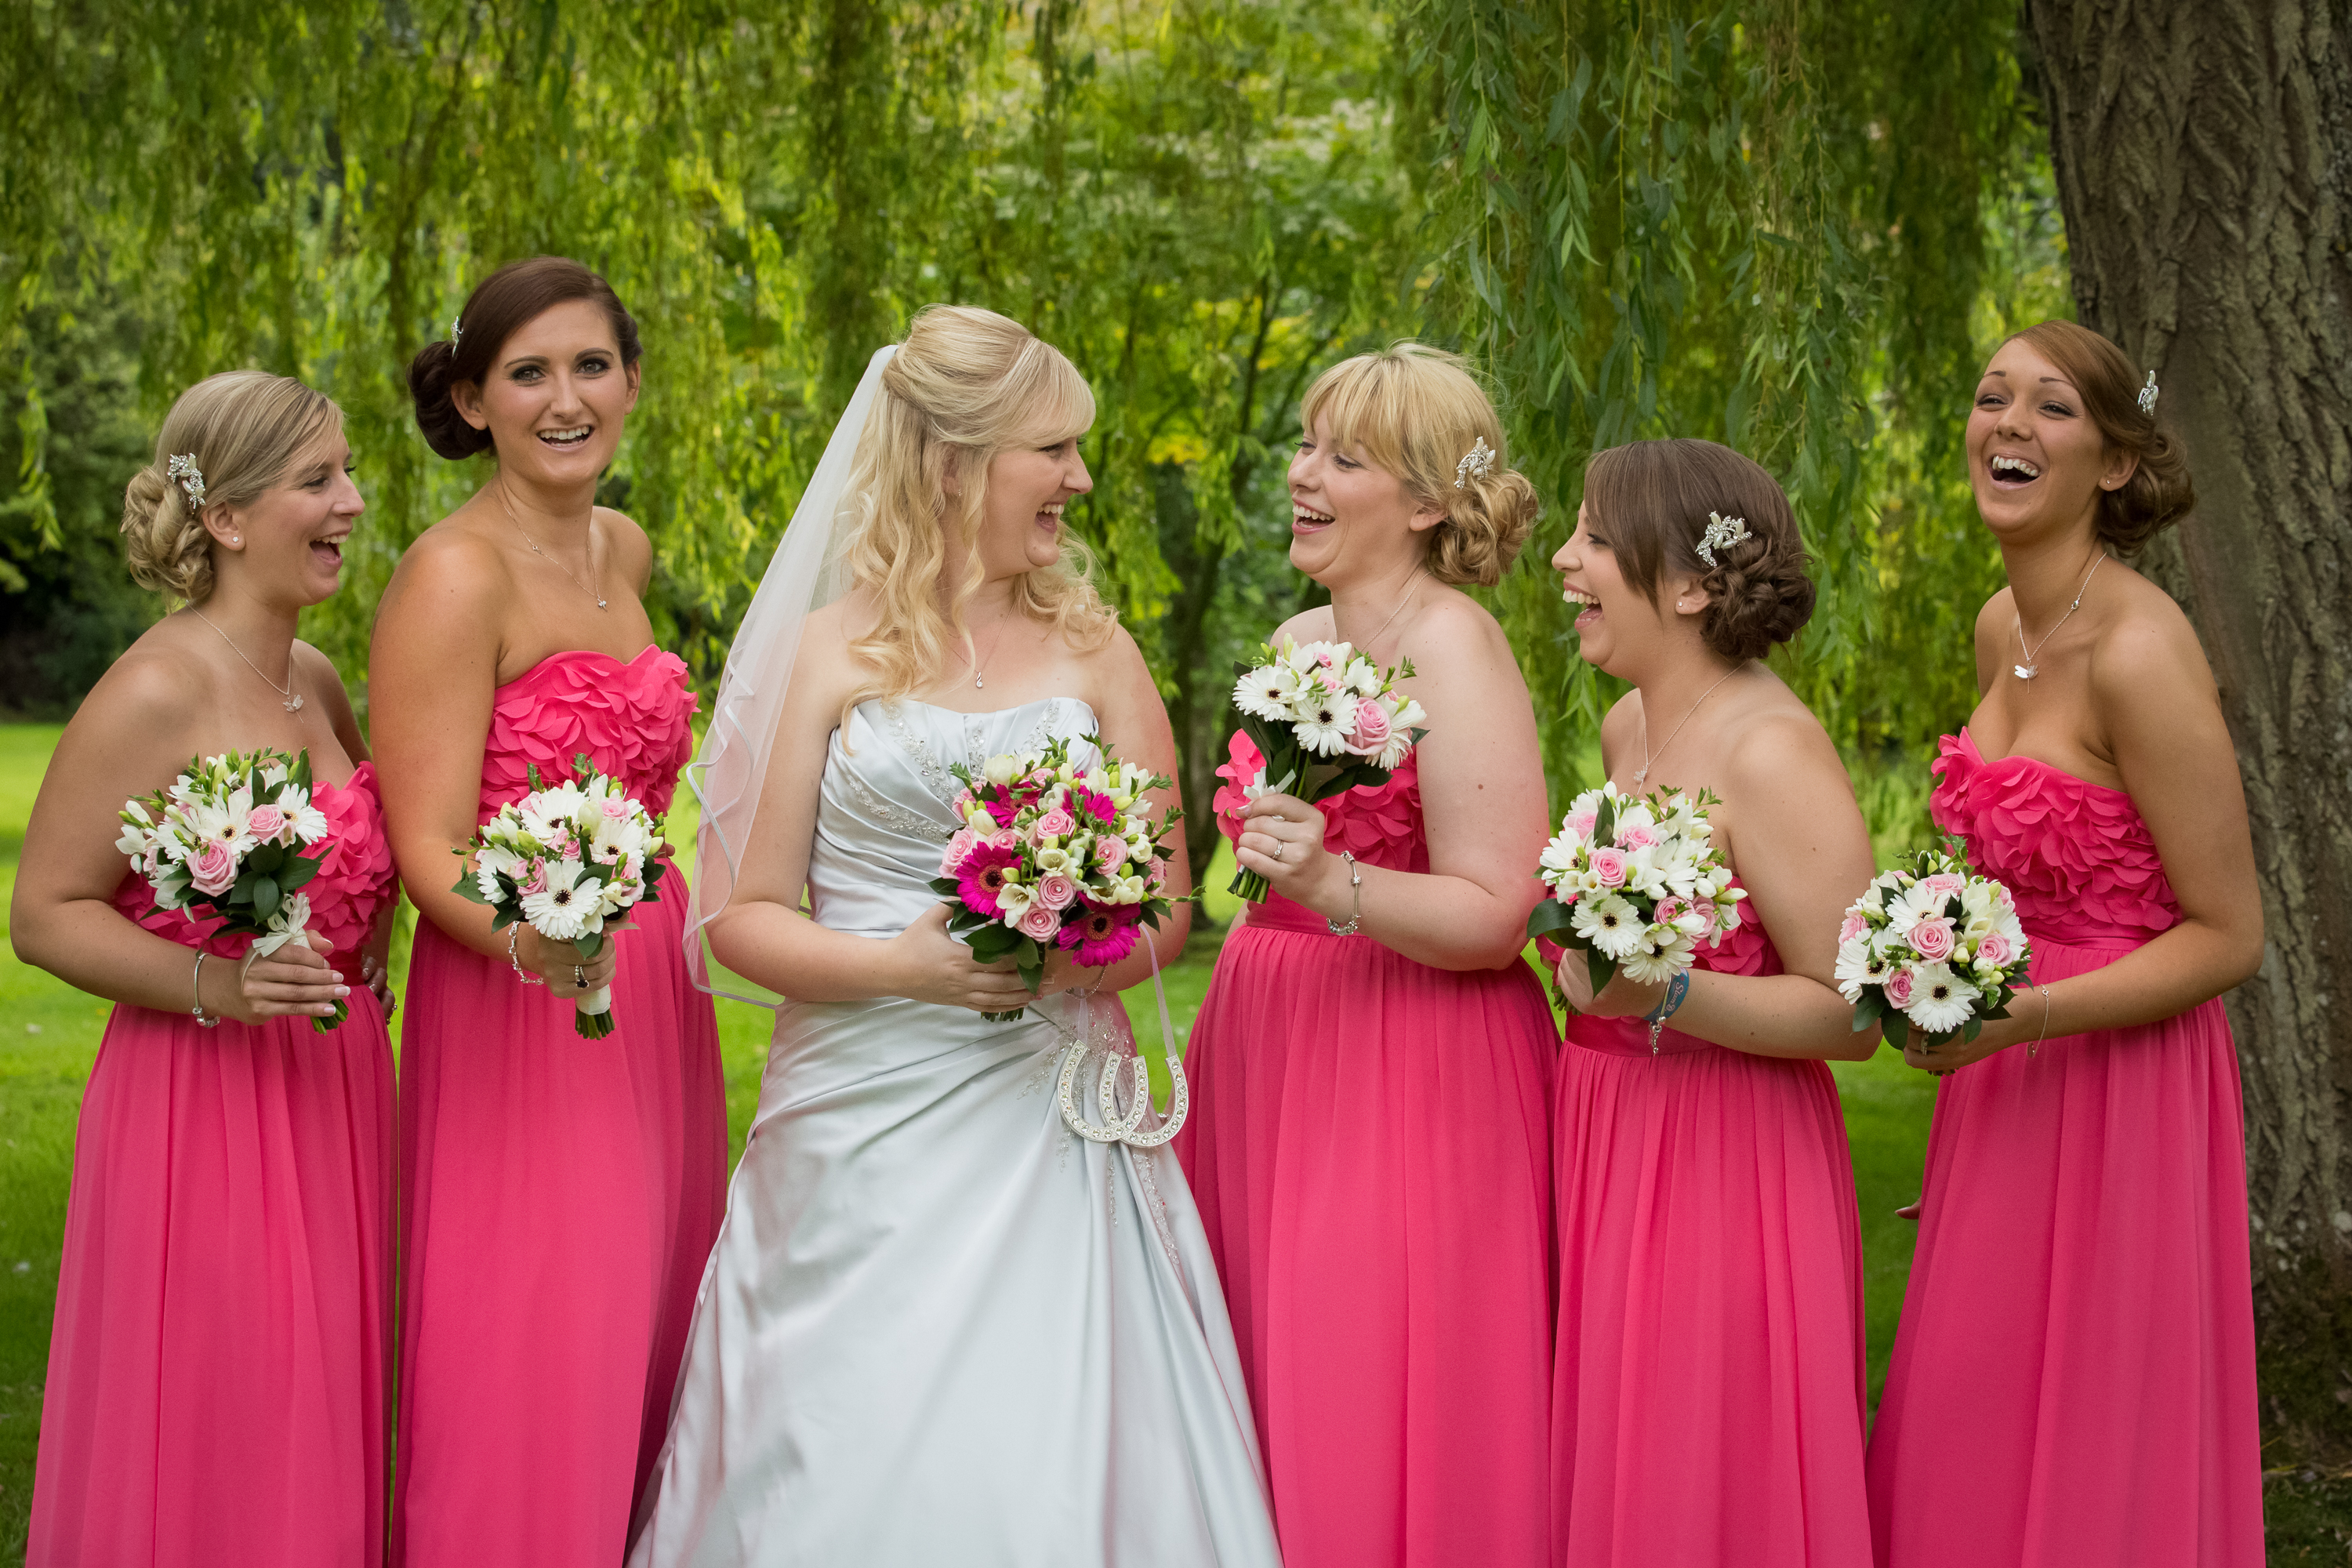 Wedding blog bamboozled by photography styles photographers help fuschia pink bridesmaid dresses